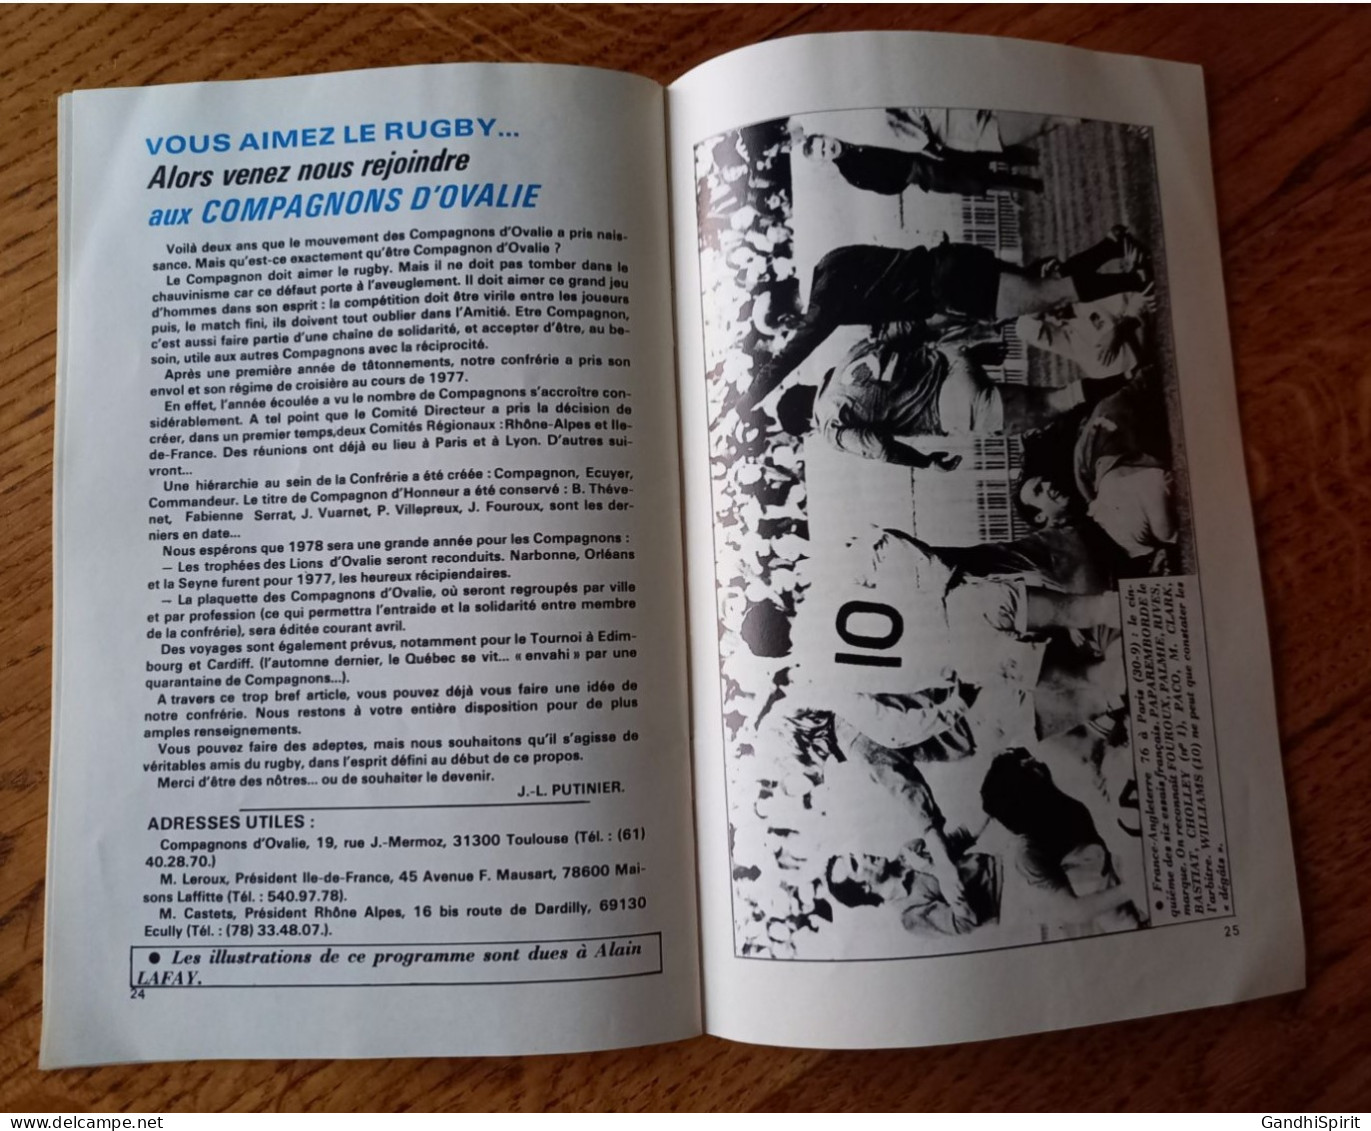 1978 France-Angleterre Programme FFR, Tournoi des Cinq 5 Nations, Five 5 Nations Tournament, Rugby